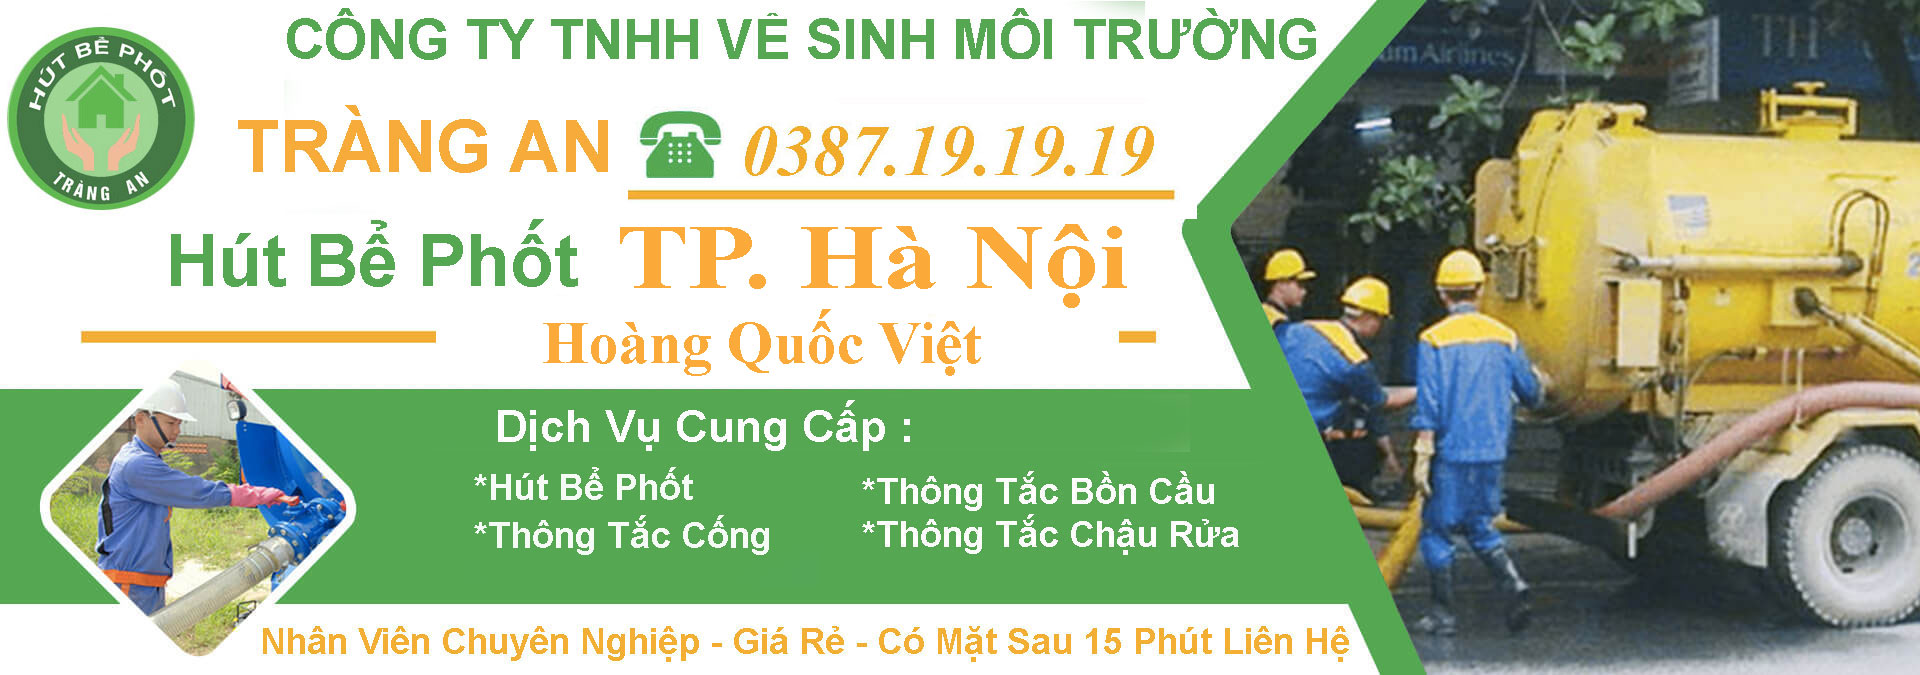 Thongtacconghoangquocviet